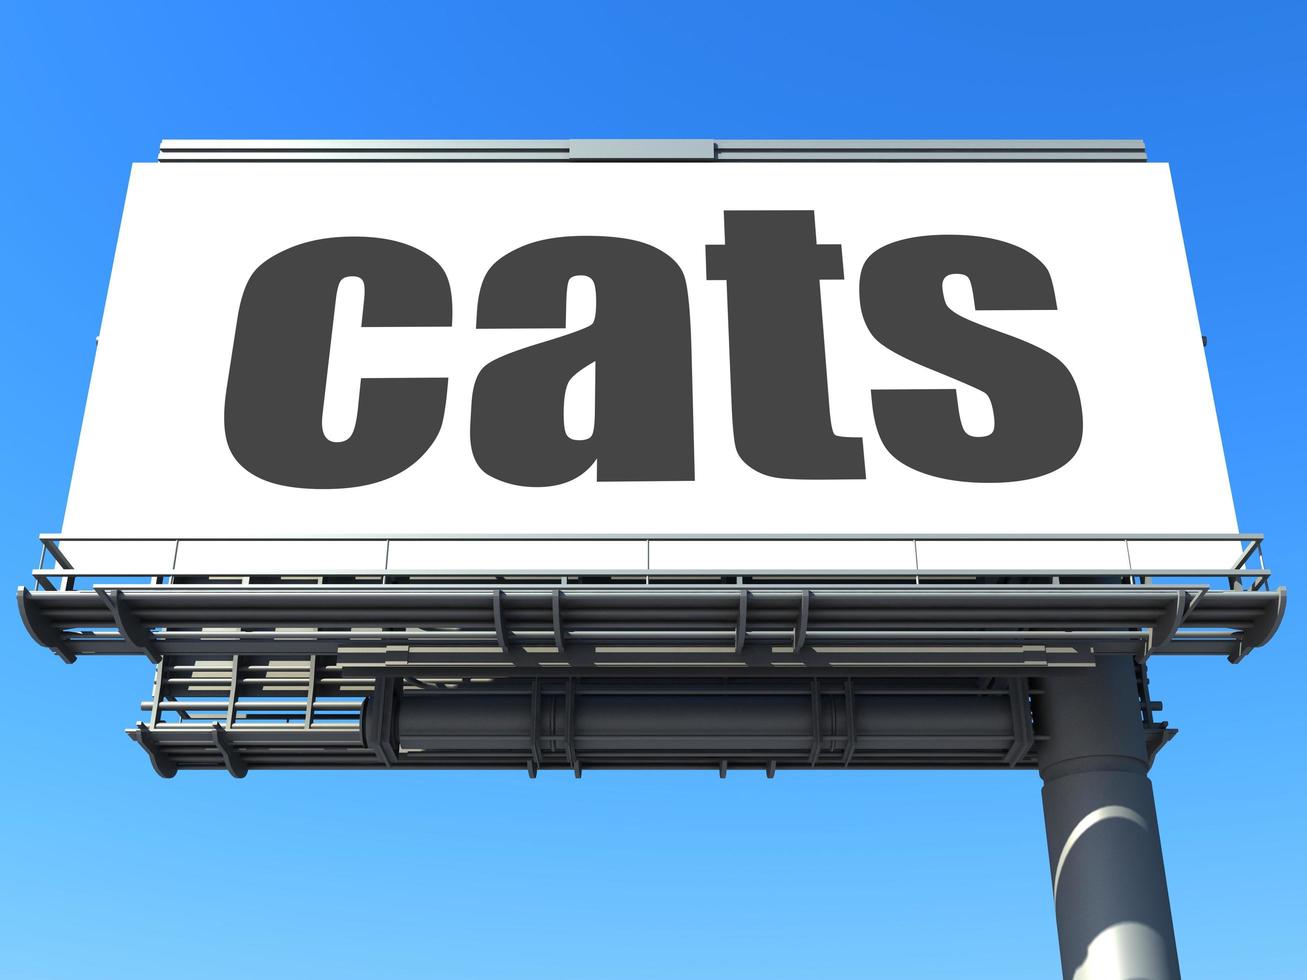 cats word on billboard photo